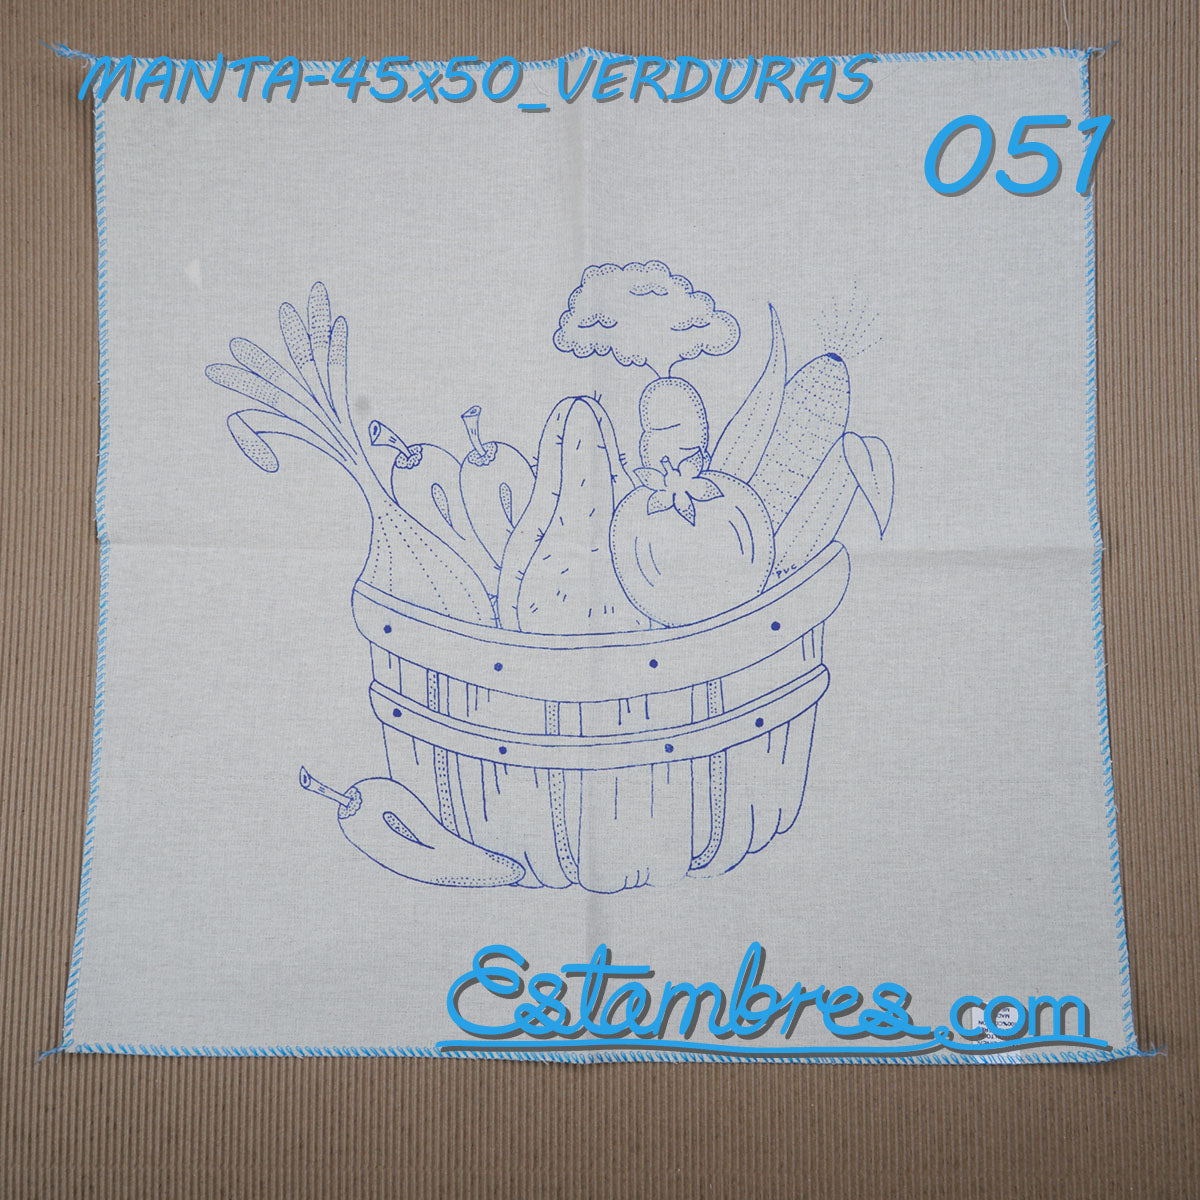 VERDURAS - Manta [45x50cm]